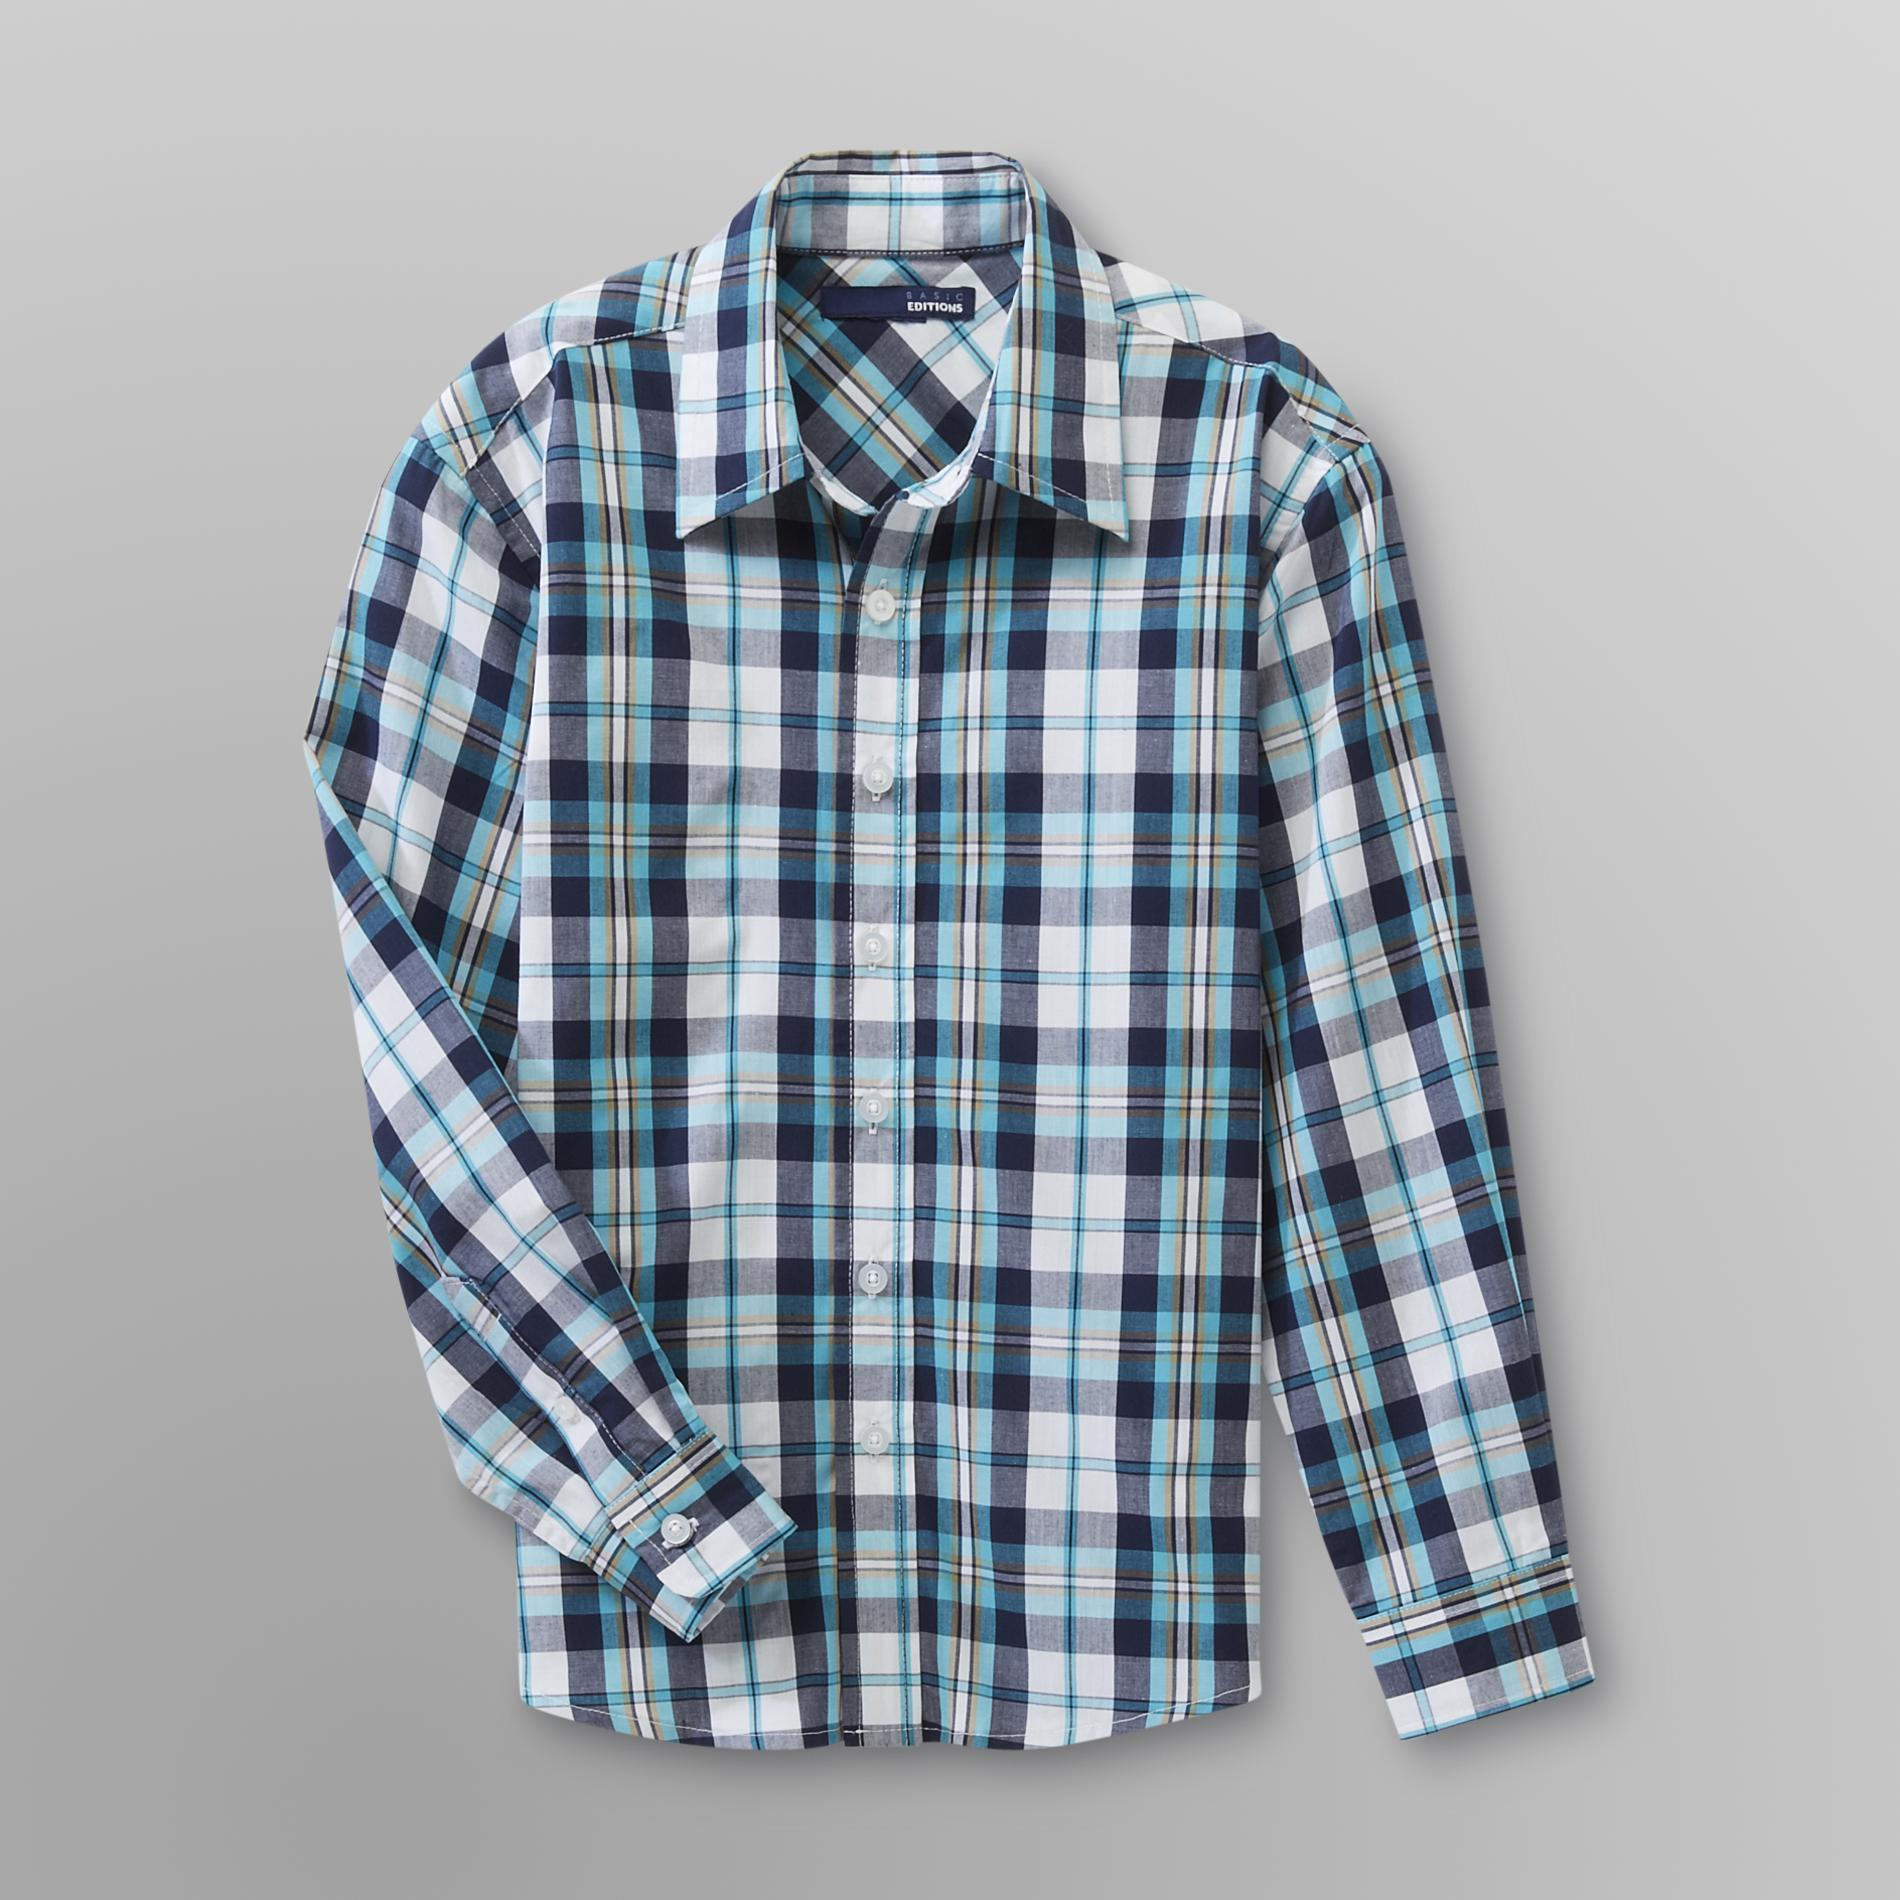 Basic Editions Boy's Woven Shirt - Plaid